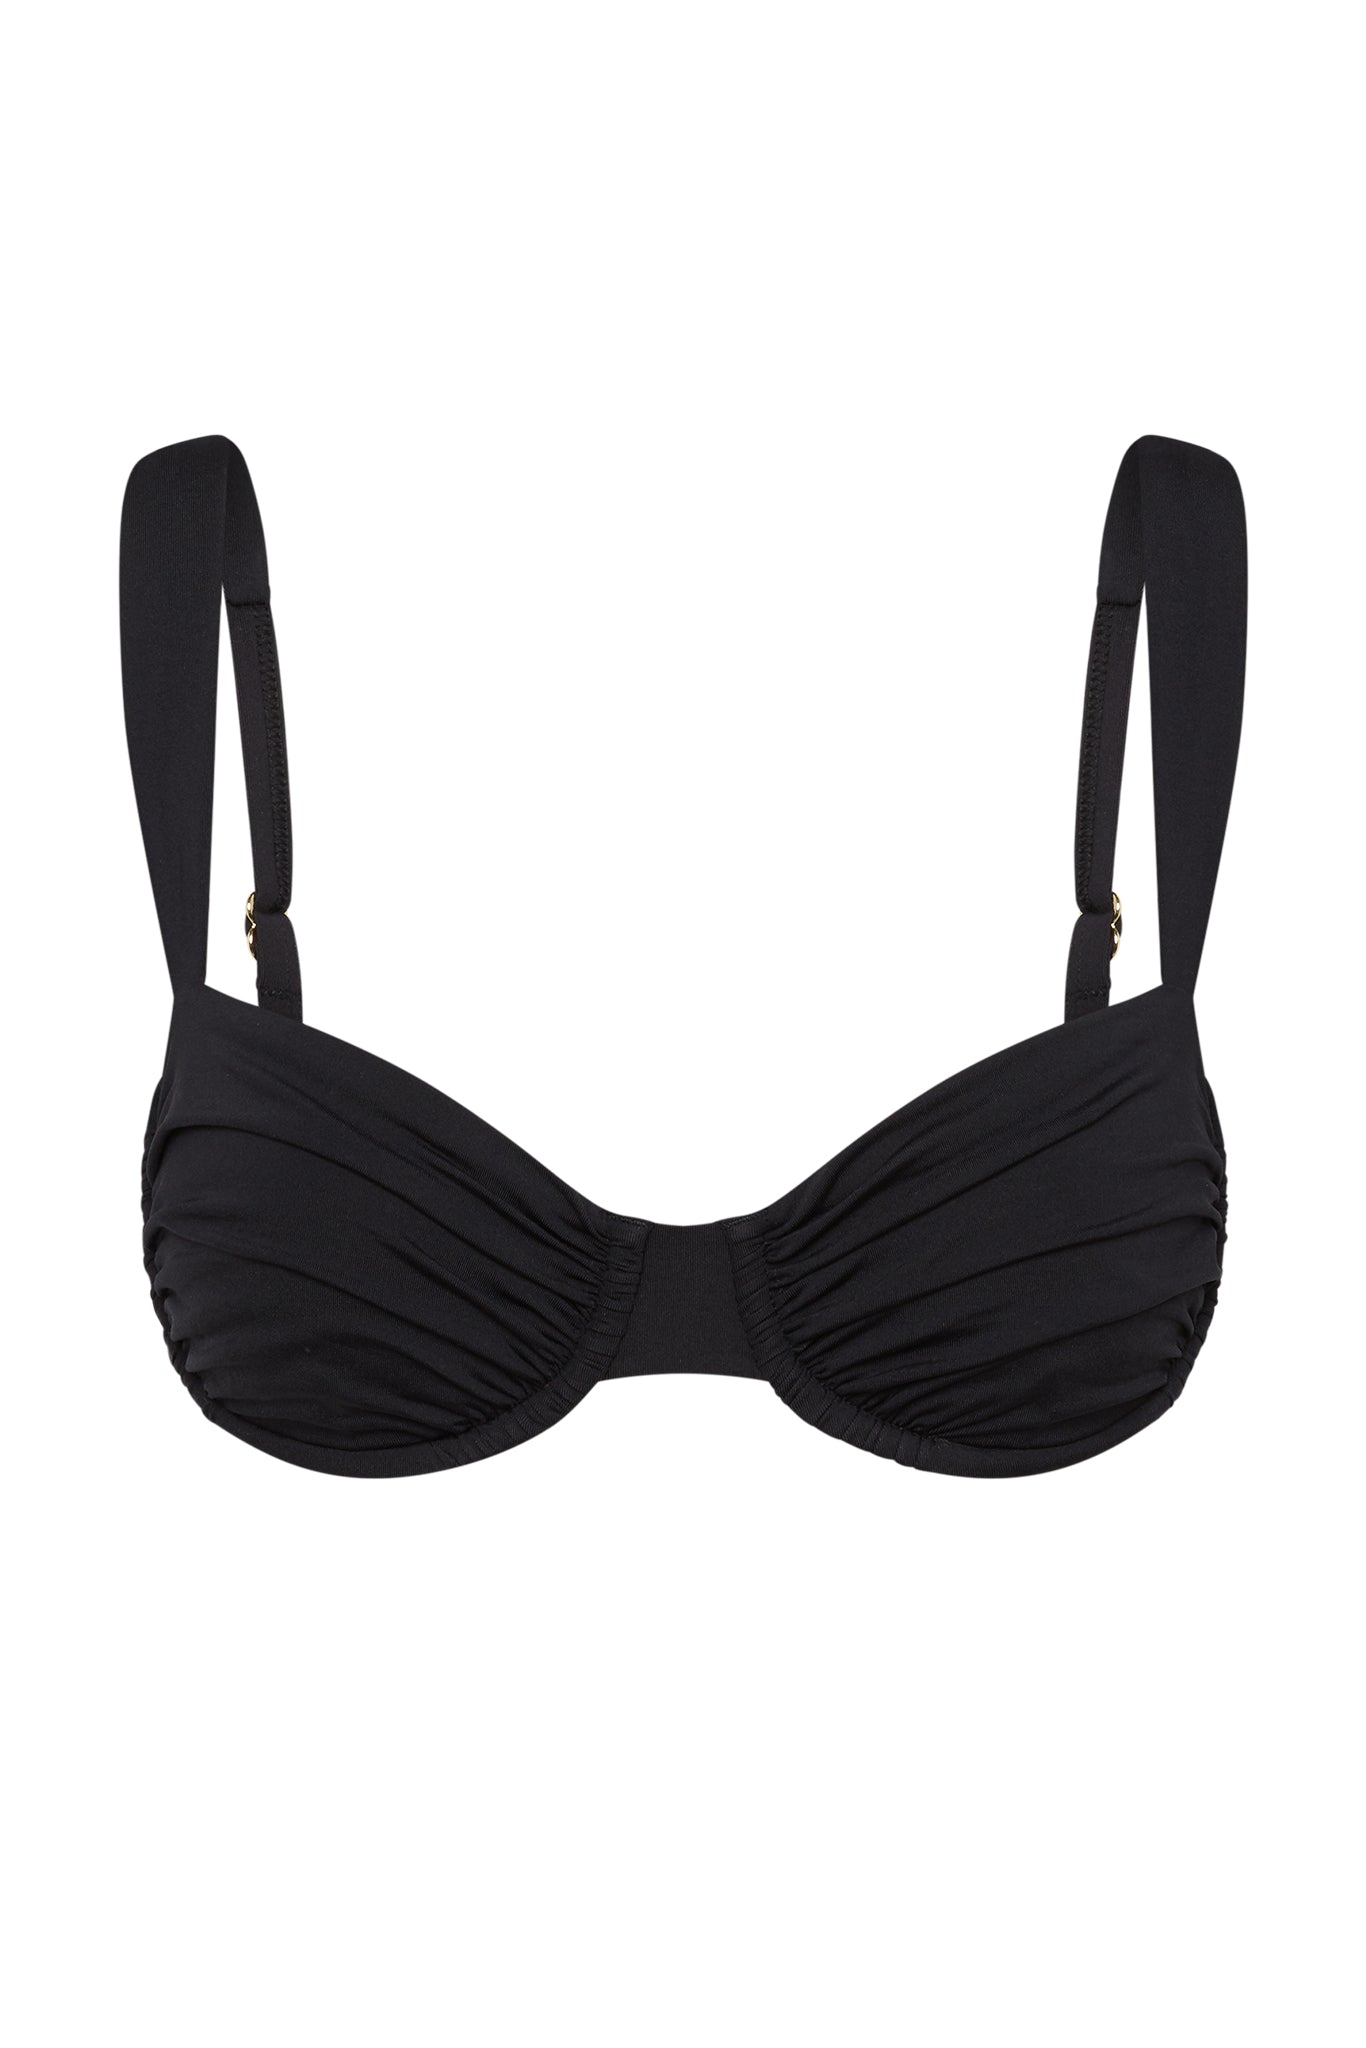 Black Bikini For Small Breasts - Best Price in Singapore - Jan